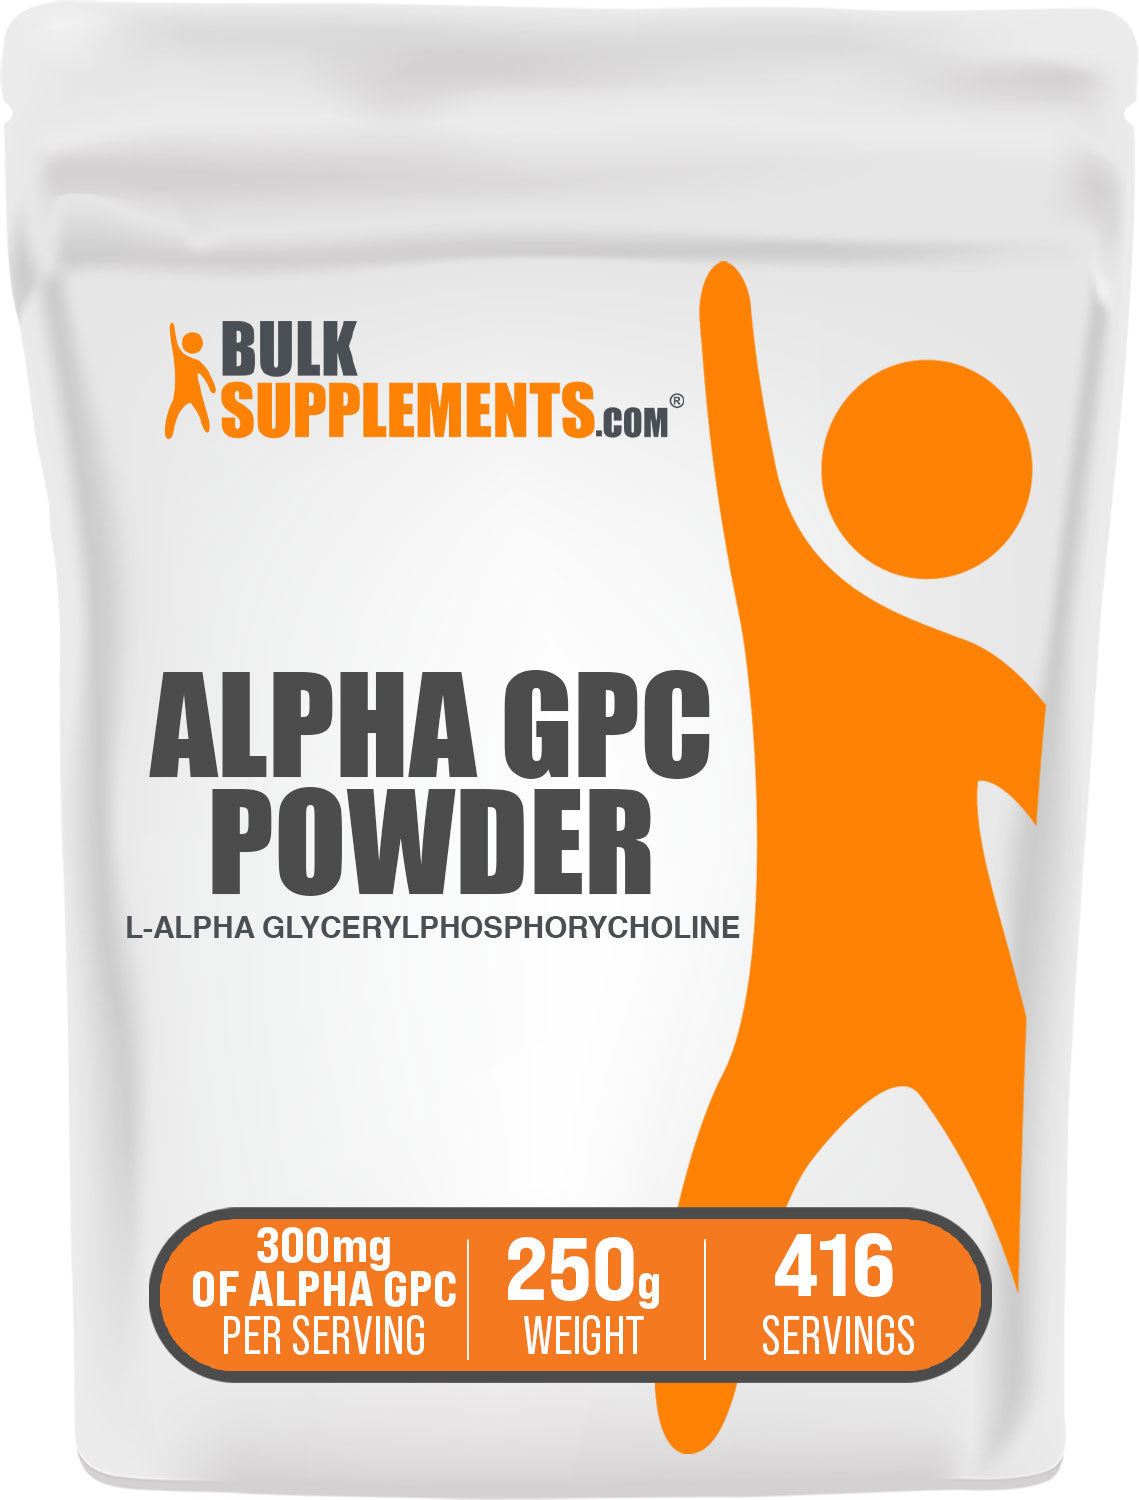 BulkSupplements.com Alpha GPC powder 250g bag image